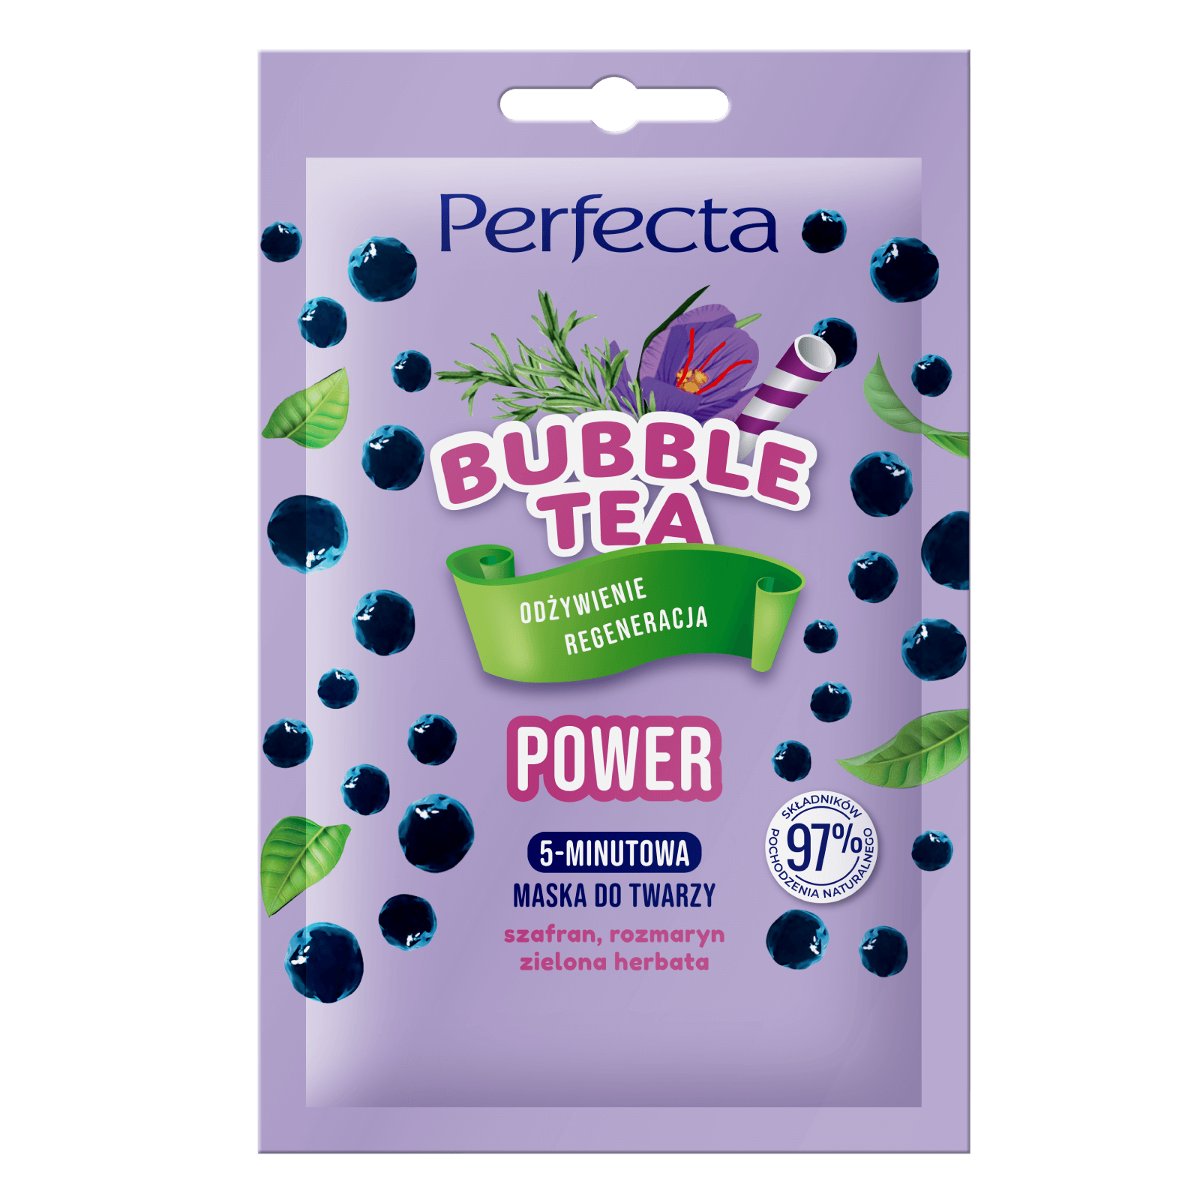 Perfecta Bubble Tea, 5-minutowa maska do twarzy Power 10.0 ml